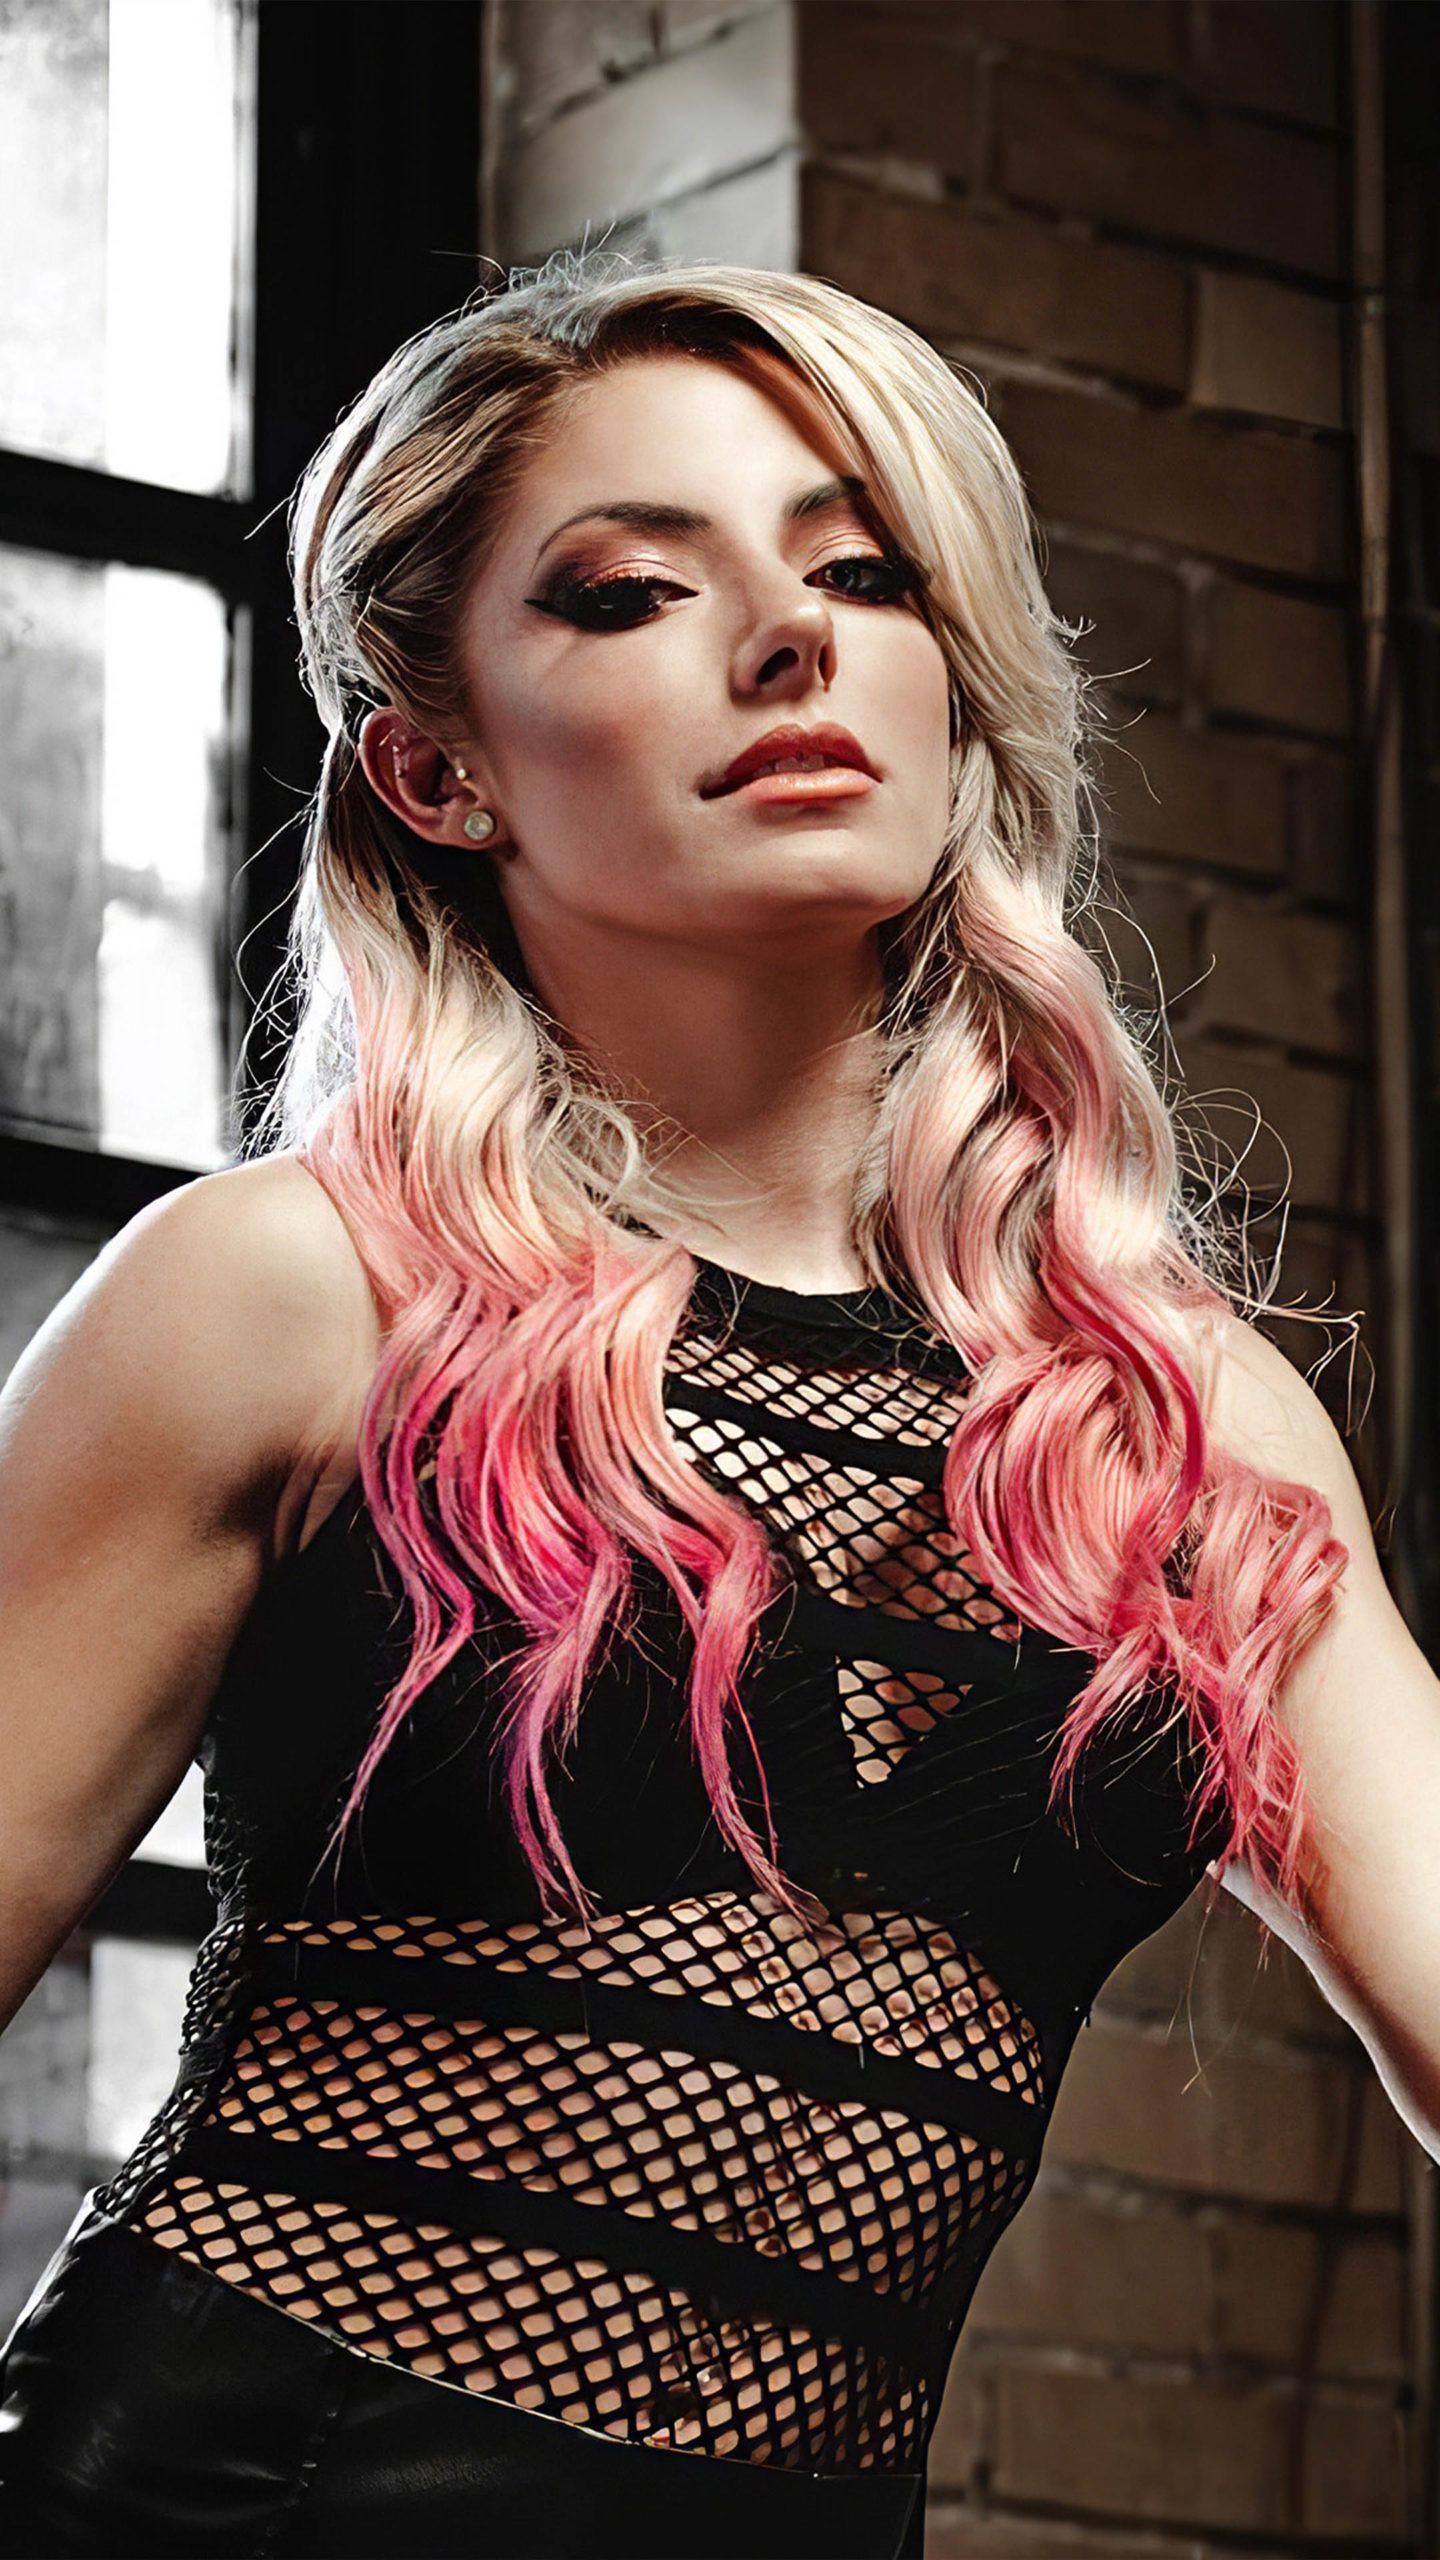 Alexa Bliss WWE Girl 4K Ultra HD Mobile Wallpaper. Wwe girls, Wwe raw women, Raw women's champion